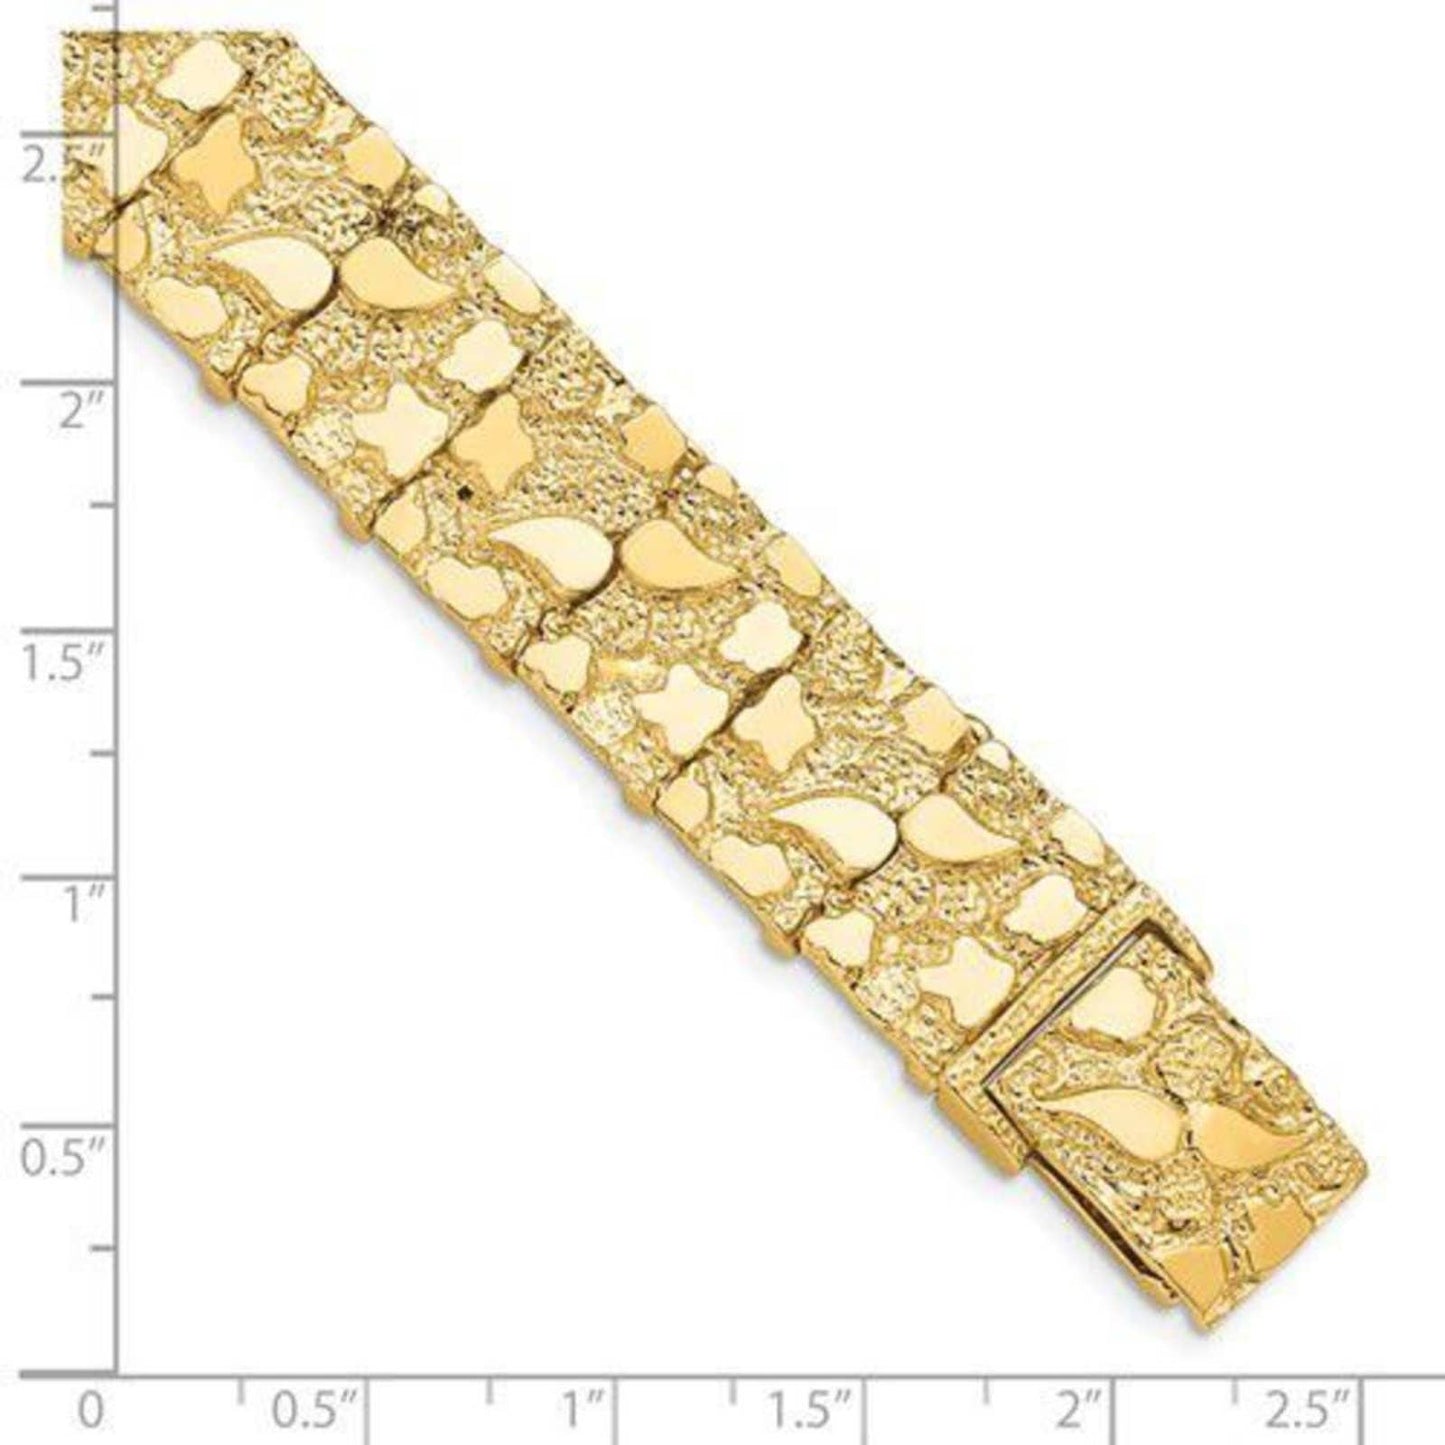 10k Gold NUGGET Bracelet- 8 inches long- 15mm wide